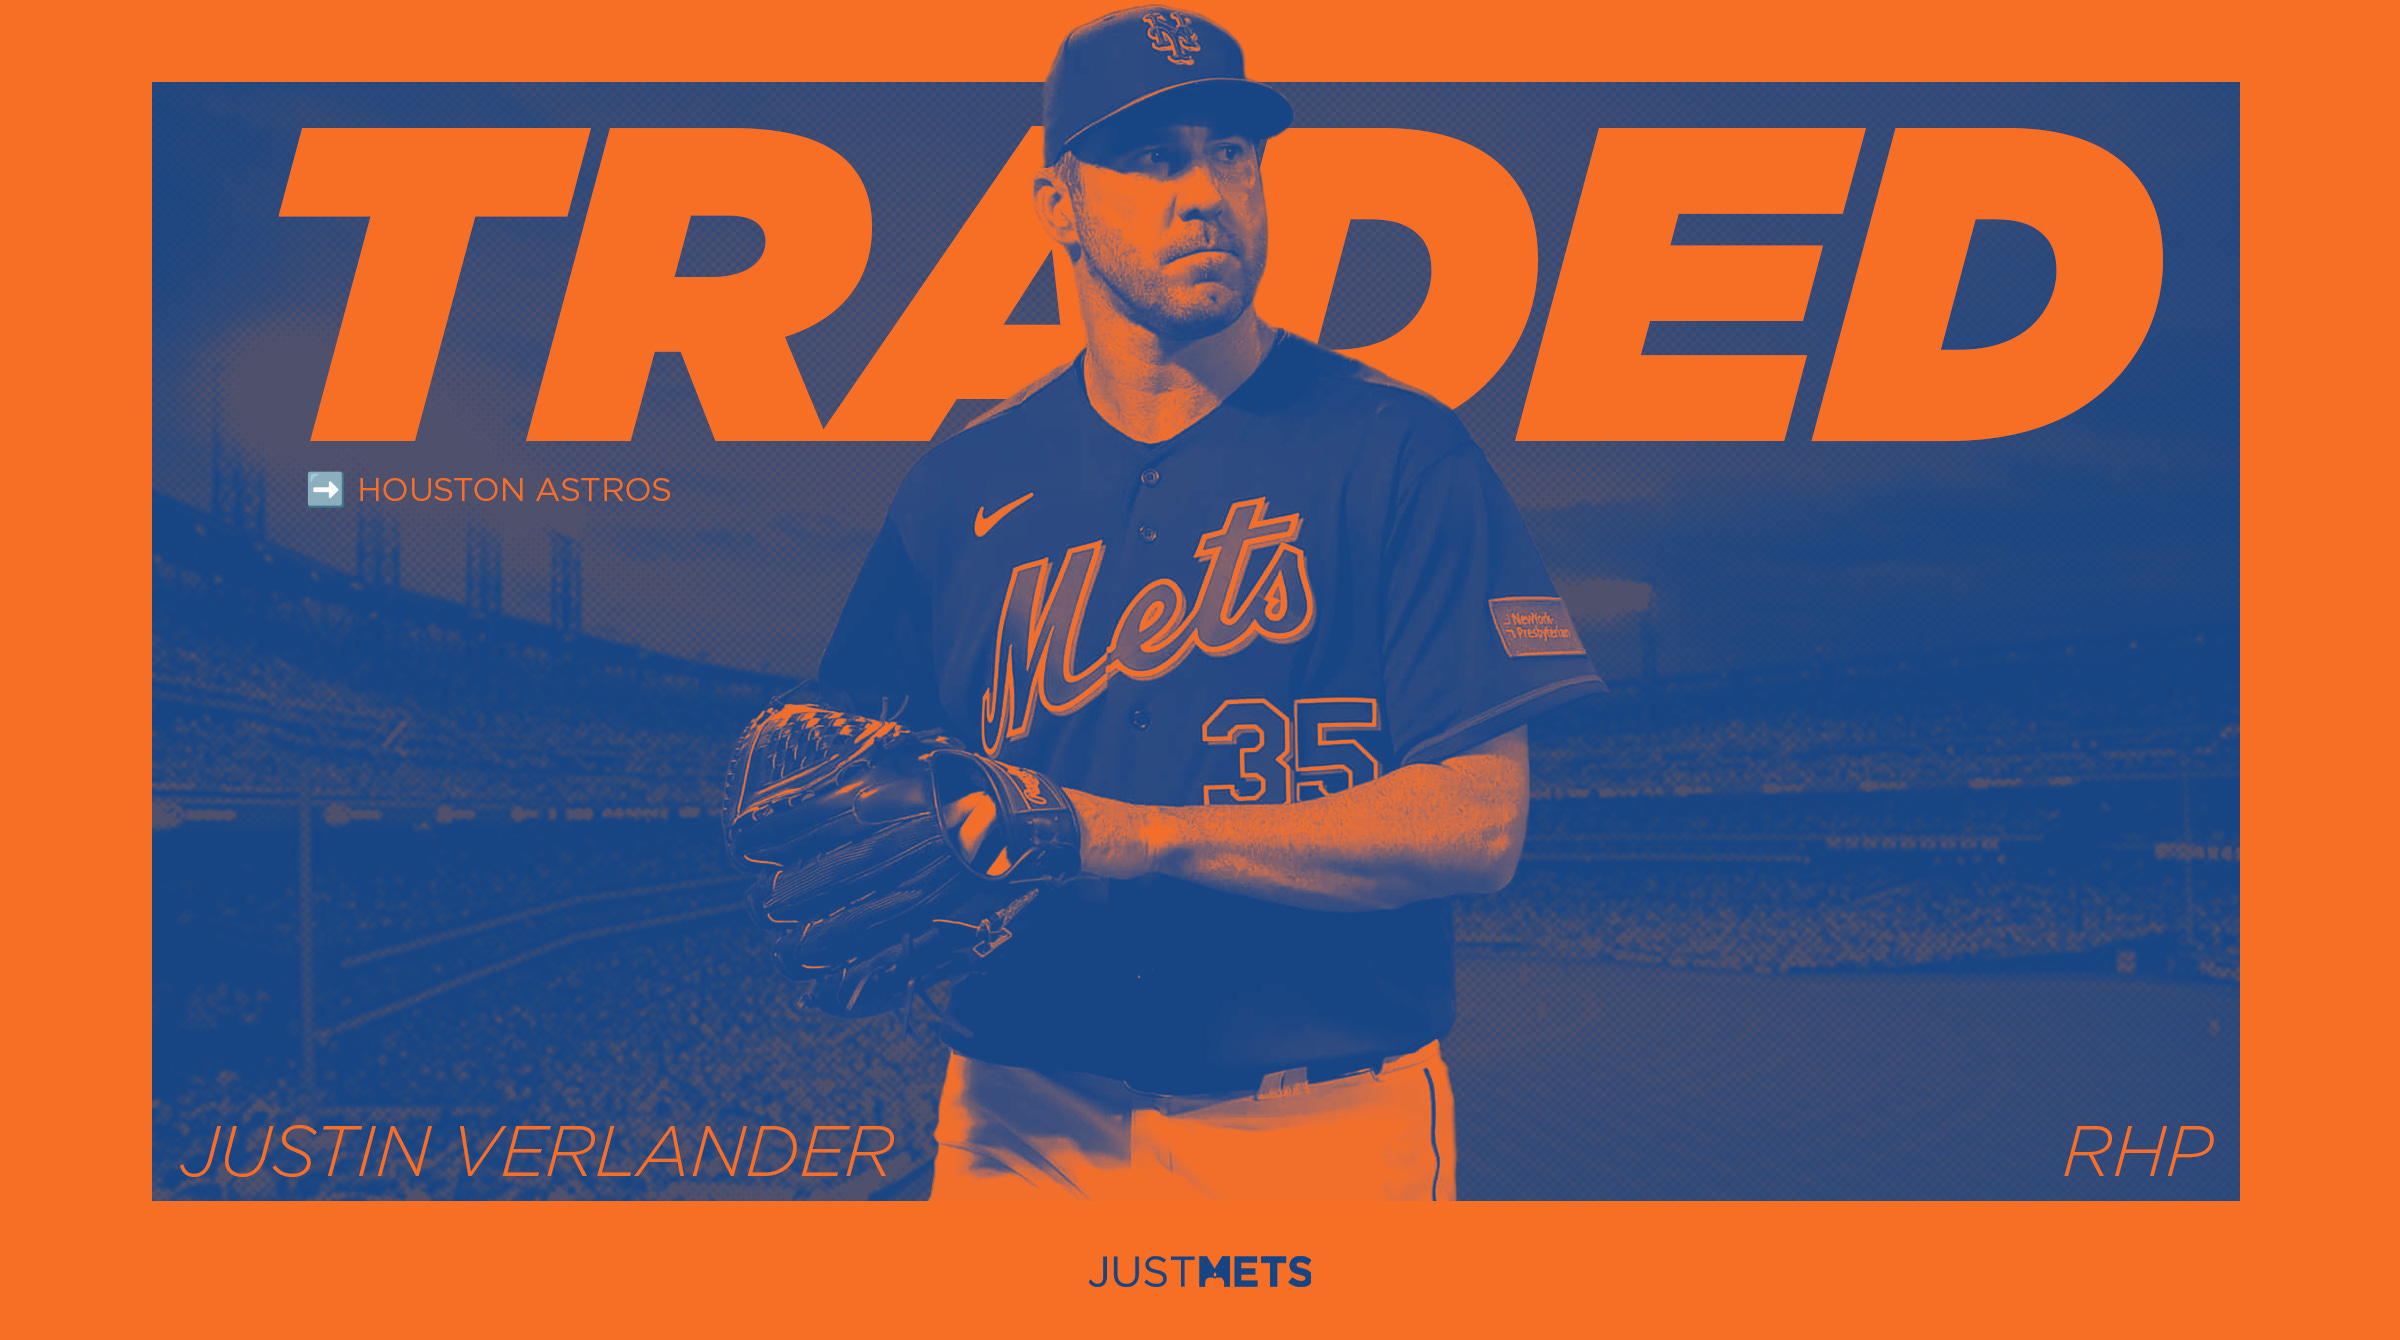 Drew Gilbert, Ryan Clifford: Prospects Mets got for Justin Verlander